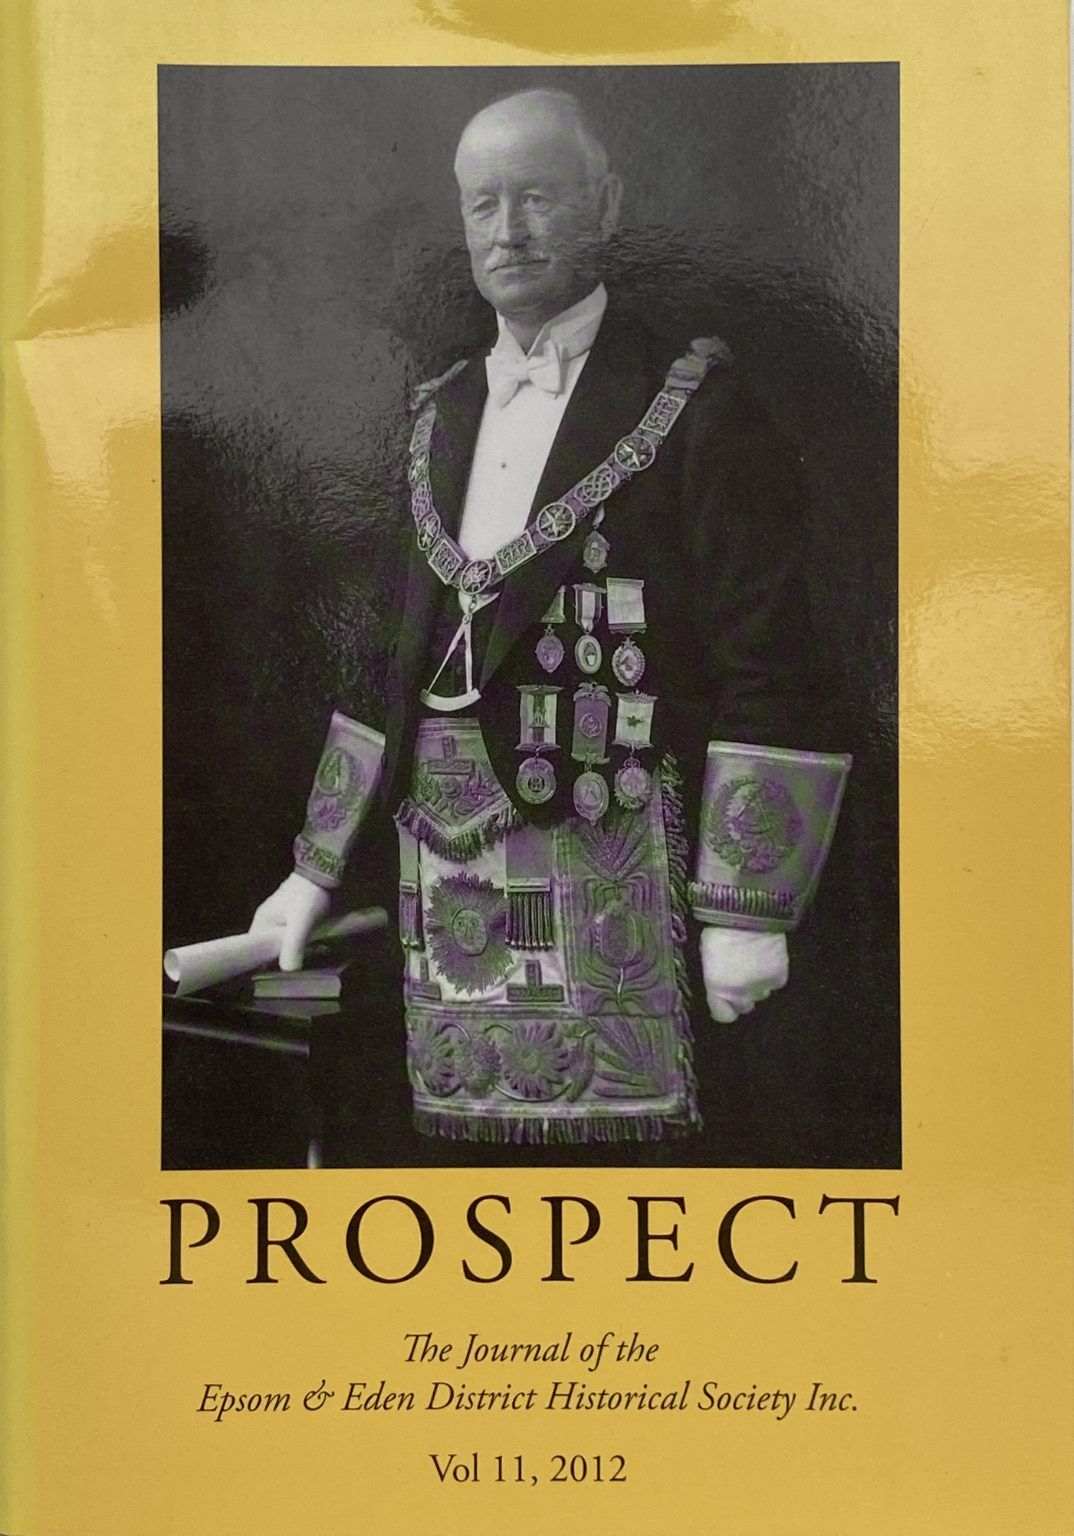 PROSPECT: Journal of the Epsom & Eden District Historical Society - Vol 11, 2012